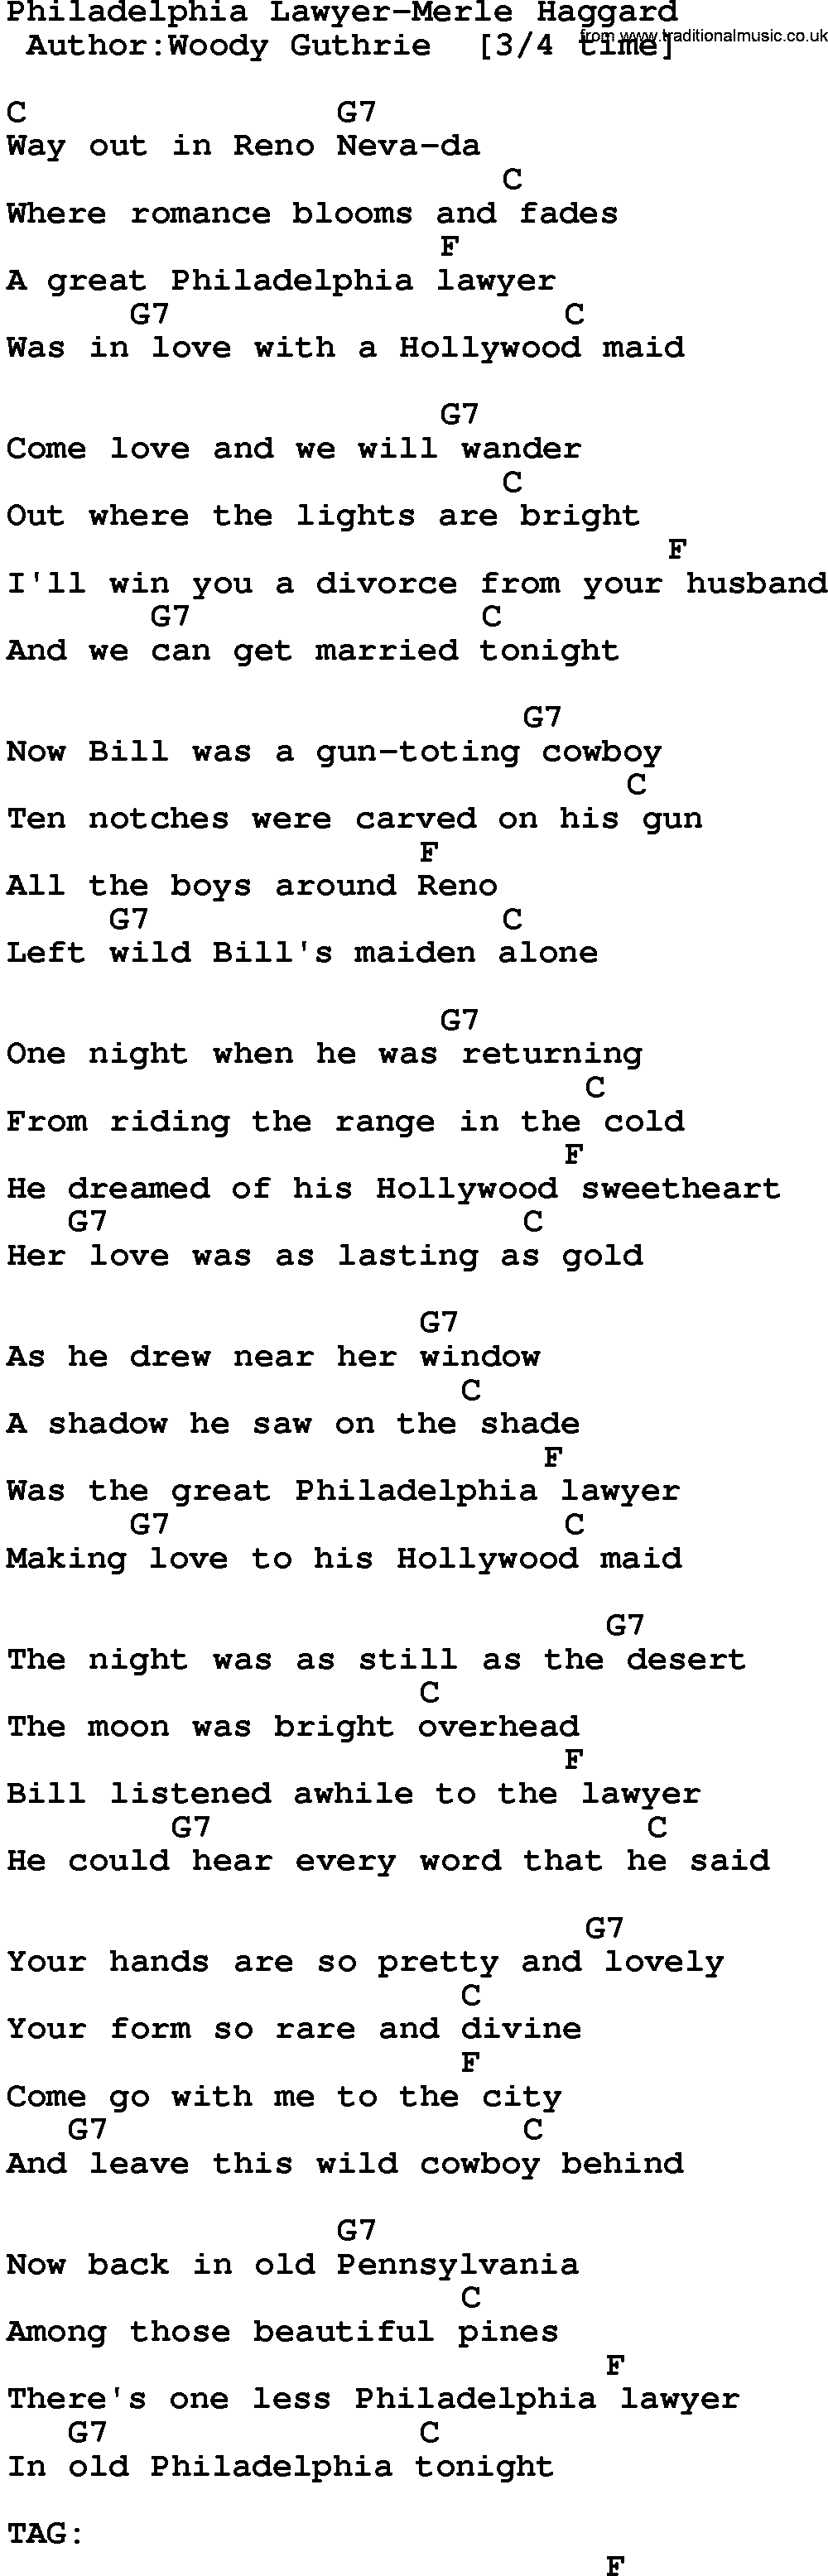 Country music song: Philadelphia Lawyer-Merle Haggard lyrics and chords